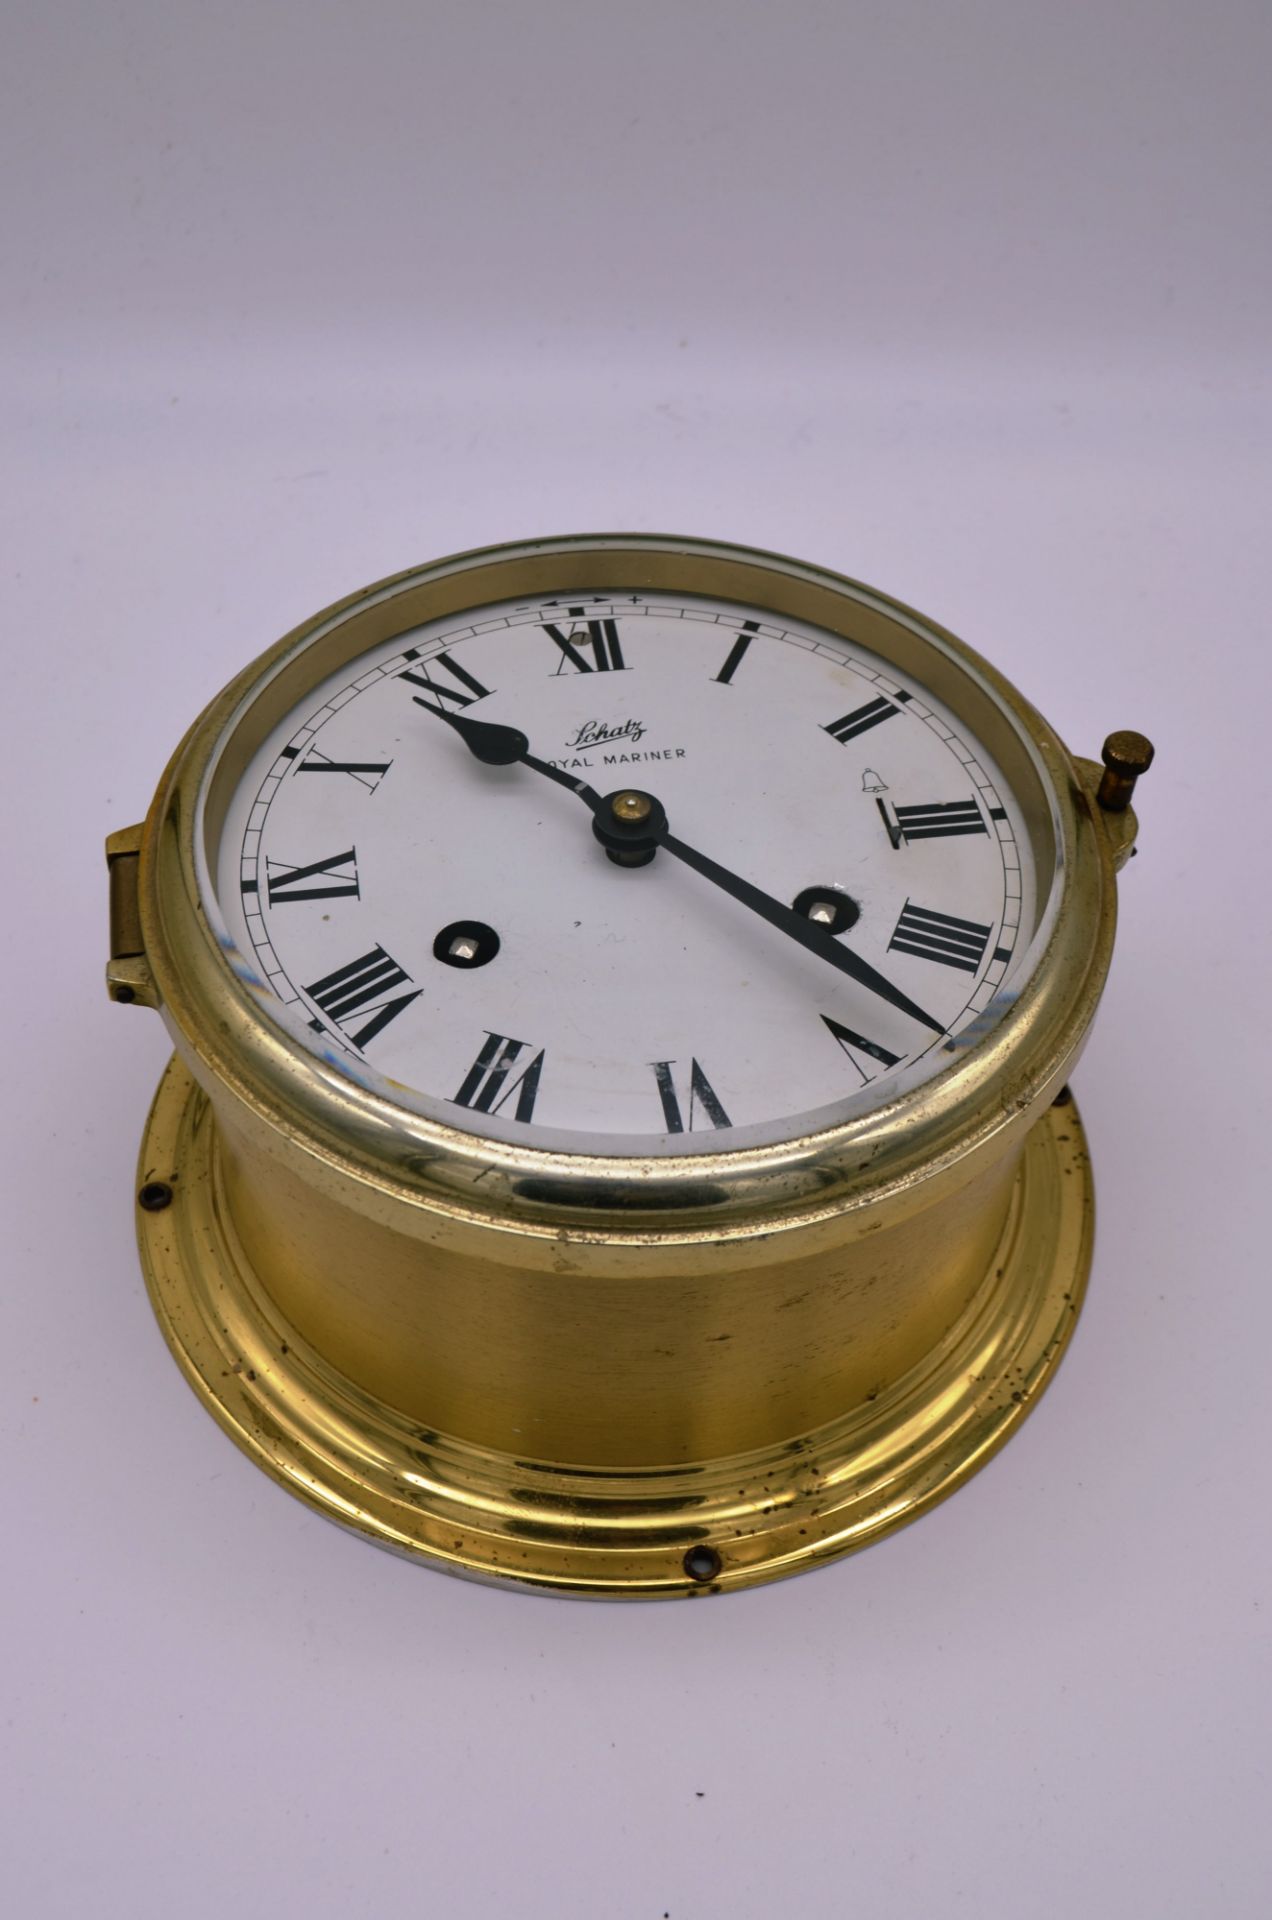 Horloge marine vintage Schatz Royal Mariner - Laiton - Seconde moitié du XXe siècle